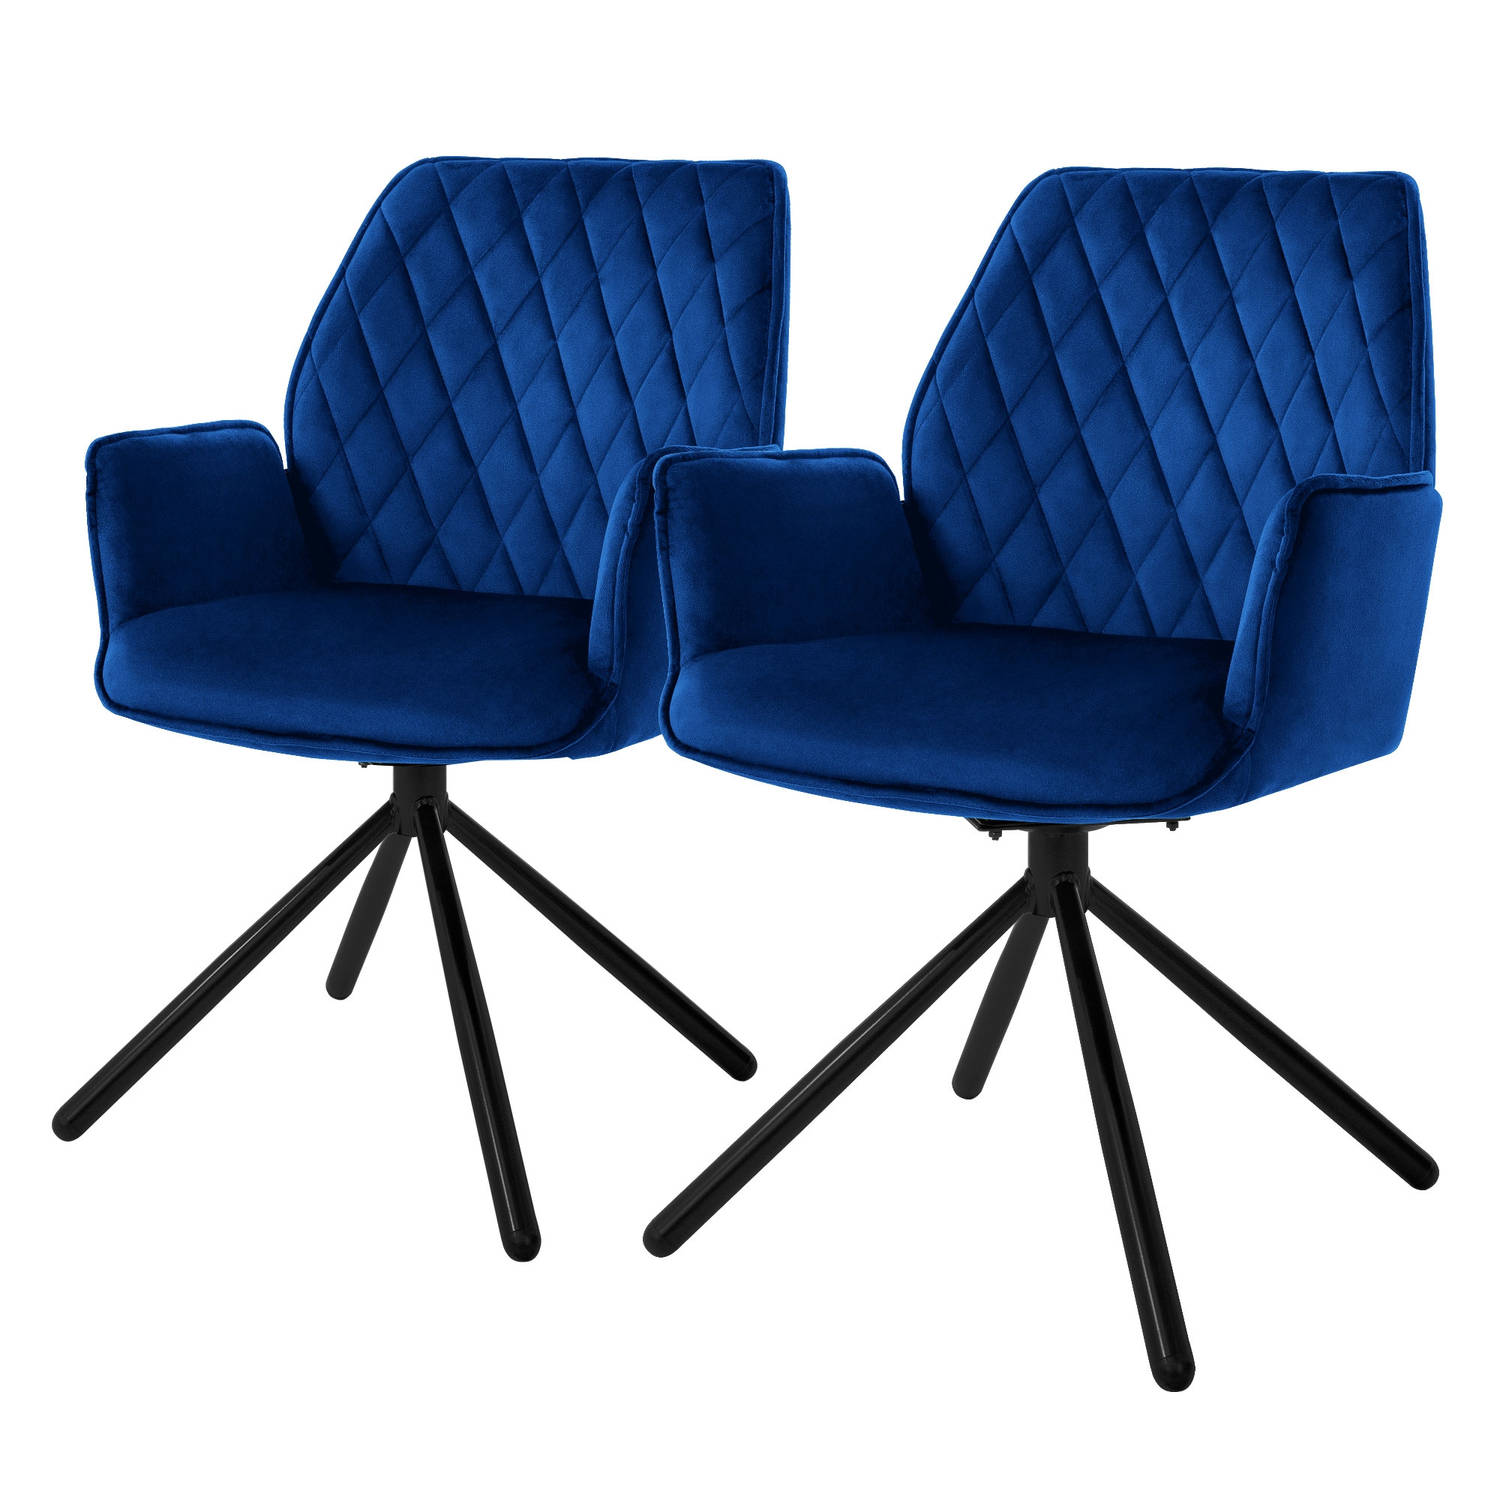 ML-Design eetkamerstoelen set van 2 fluweel donkerblauw, woonkamerstoel met arm en rugleuning, draai